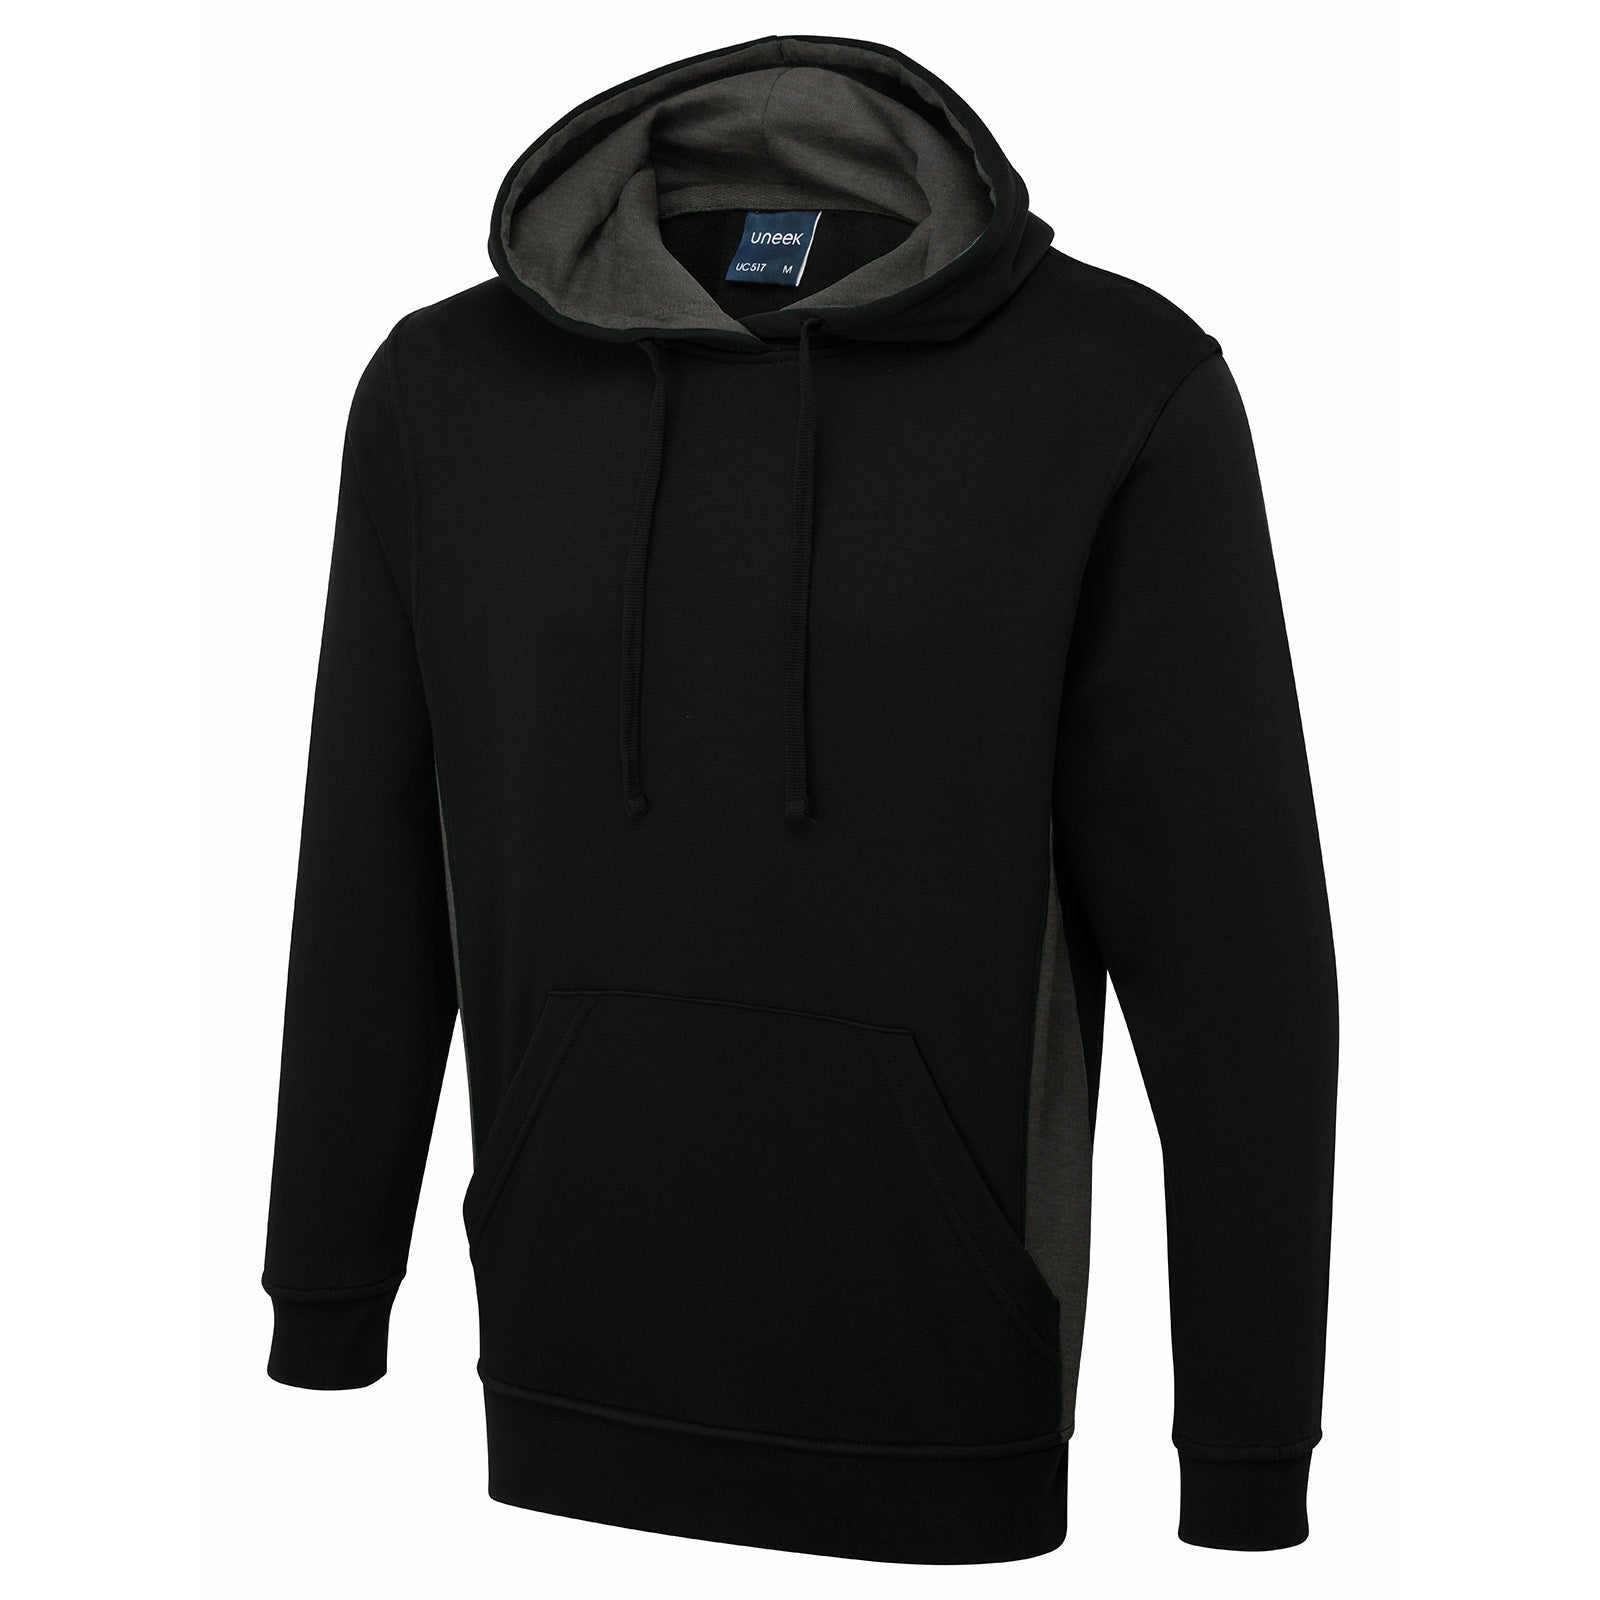 Two tone hooded sweatshirt Black & Grey